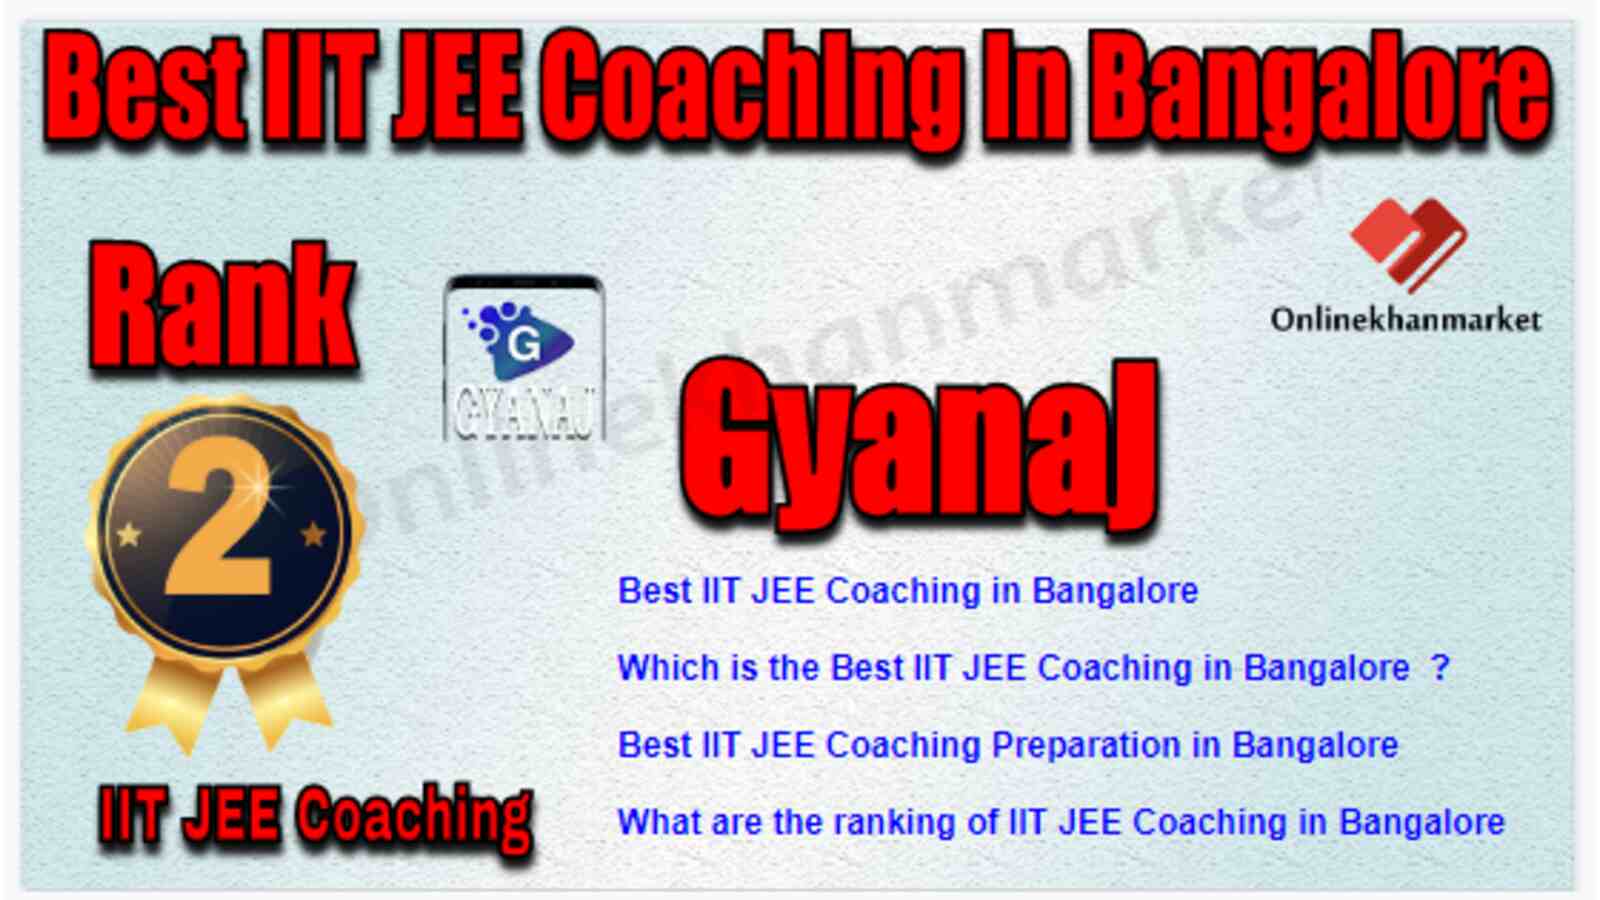 Rank 2 Best IIT JEE Coaching in Bangalore